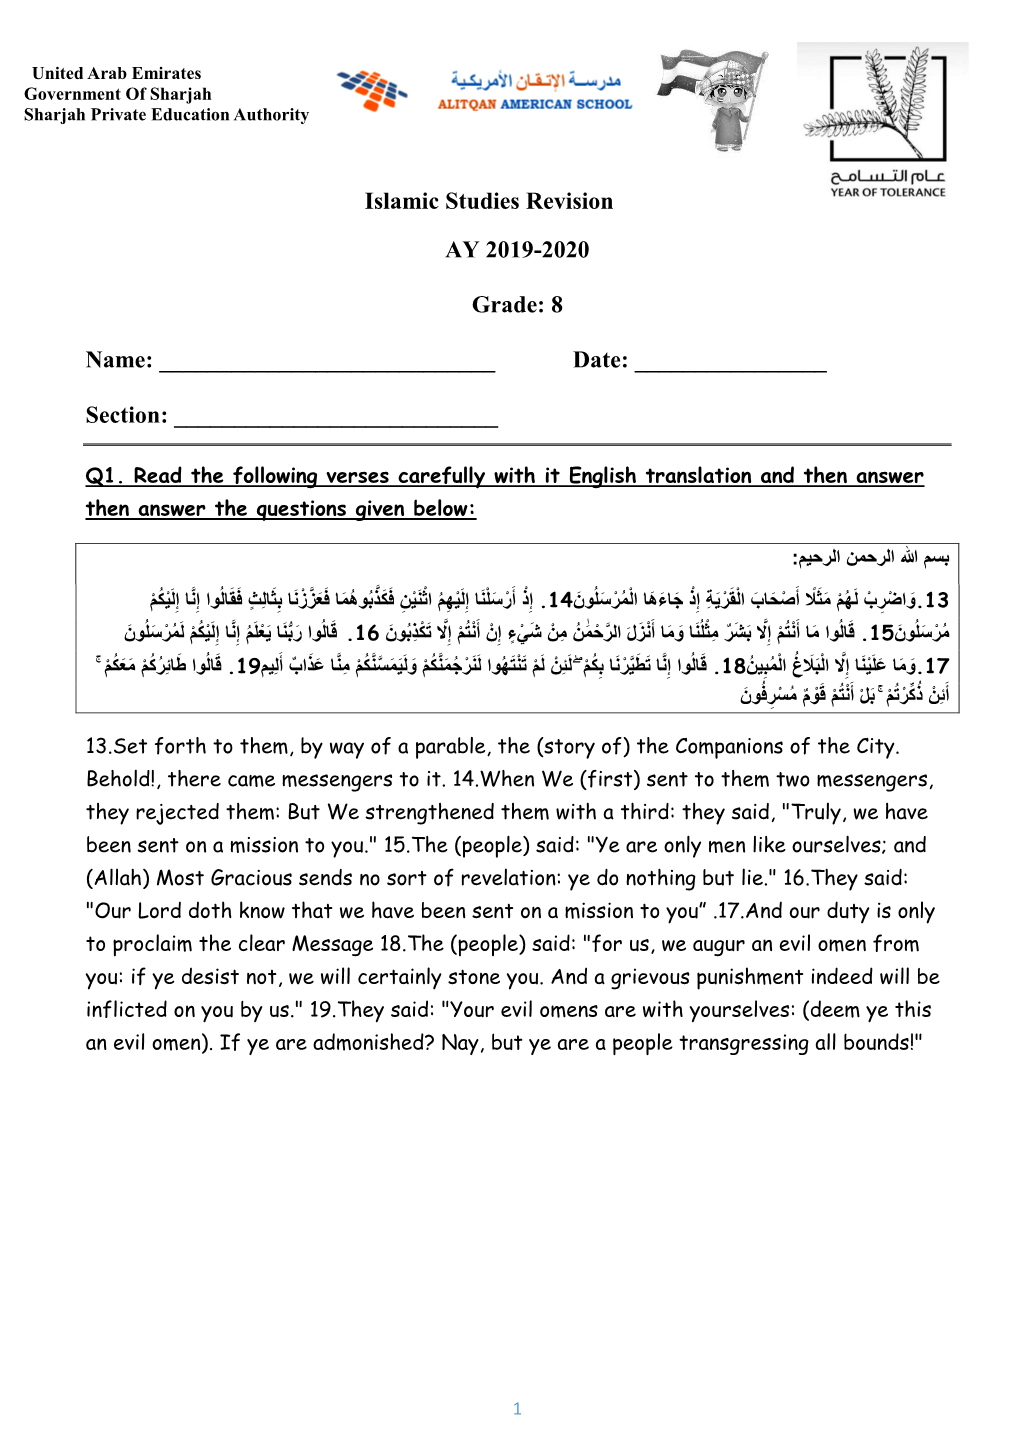 Islamic Studies Revision AY 2019-2020 Grade: 8 Name